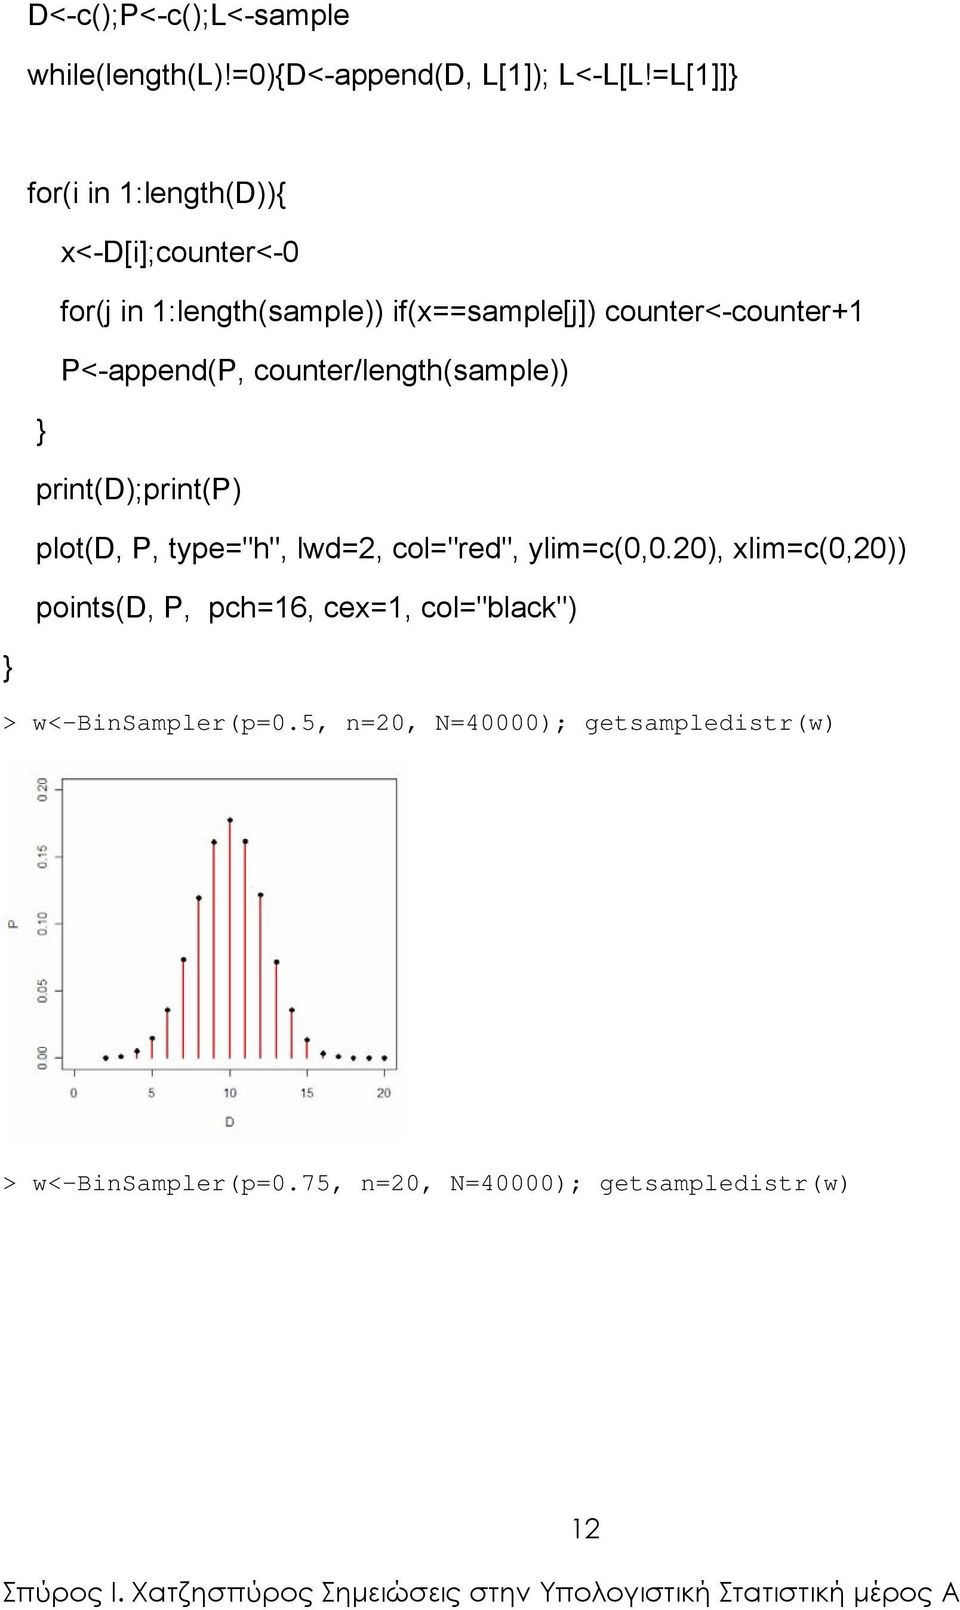 P<-apped(P, couter/legth(sample)) prit(d);prit(p) plot(d, P, type="h", lwd=2, col="red", ylim=c(0,0.